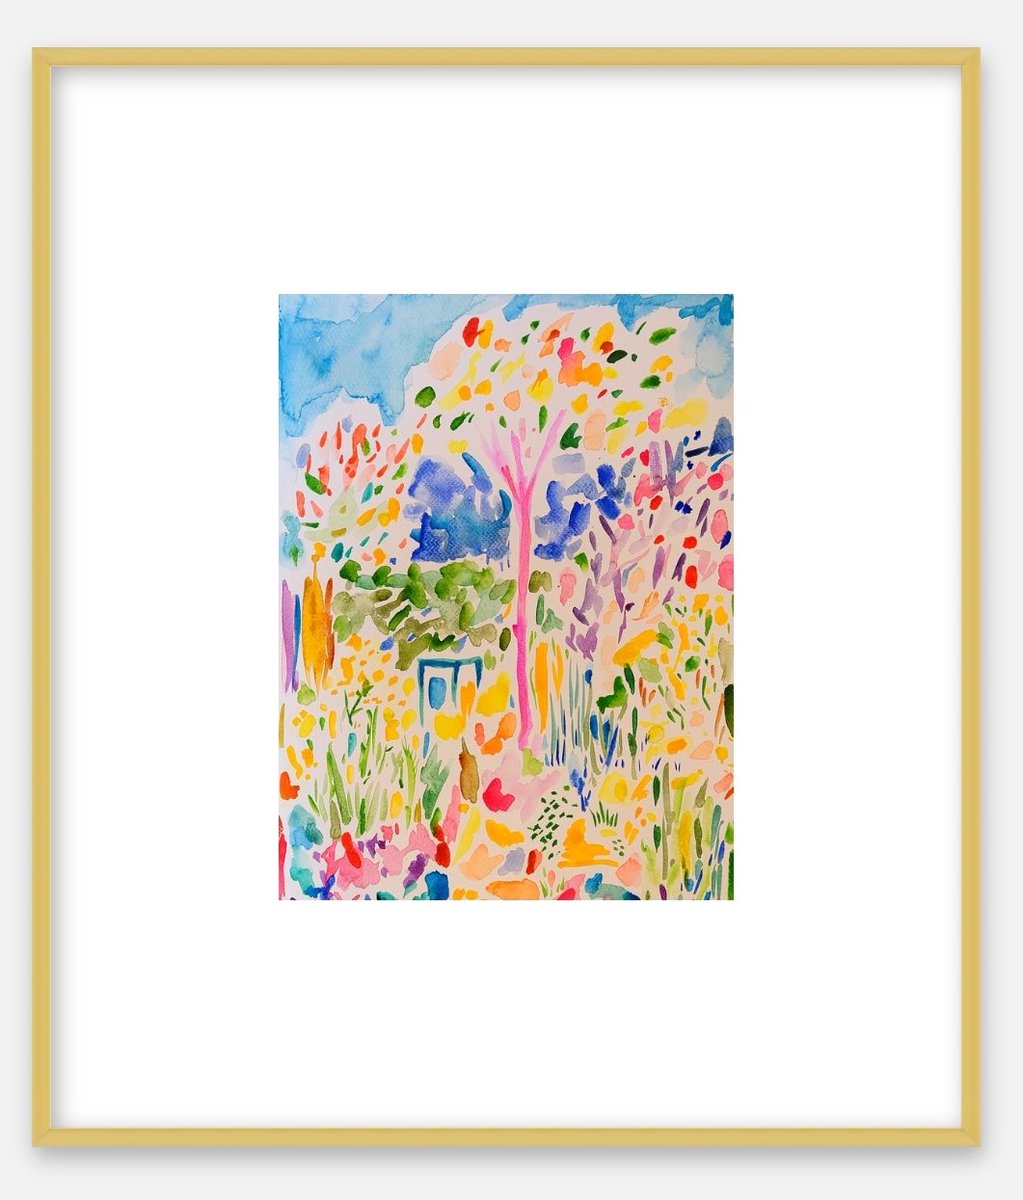 Check this Mediterranean Garden art prints that I have for sale at @ArtfullyWalls 
artfullywalls.com/artists/tamara…

#tamarajare #art #giclee #framedart #buyartonline #artprint #artfullywalls #fineartprints #framedprints #contemporaryart #contemporaryartist #womenart